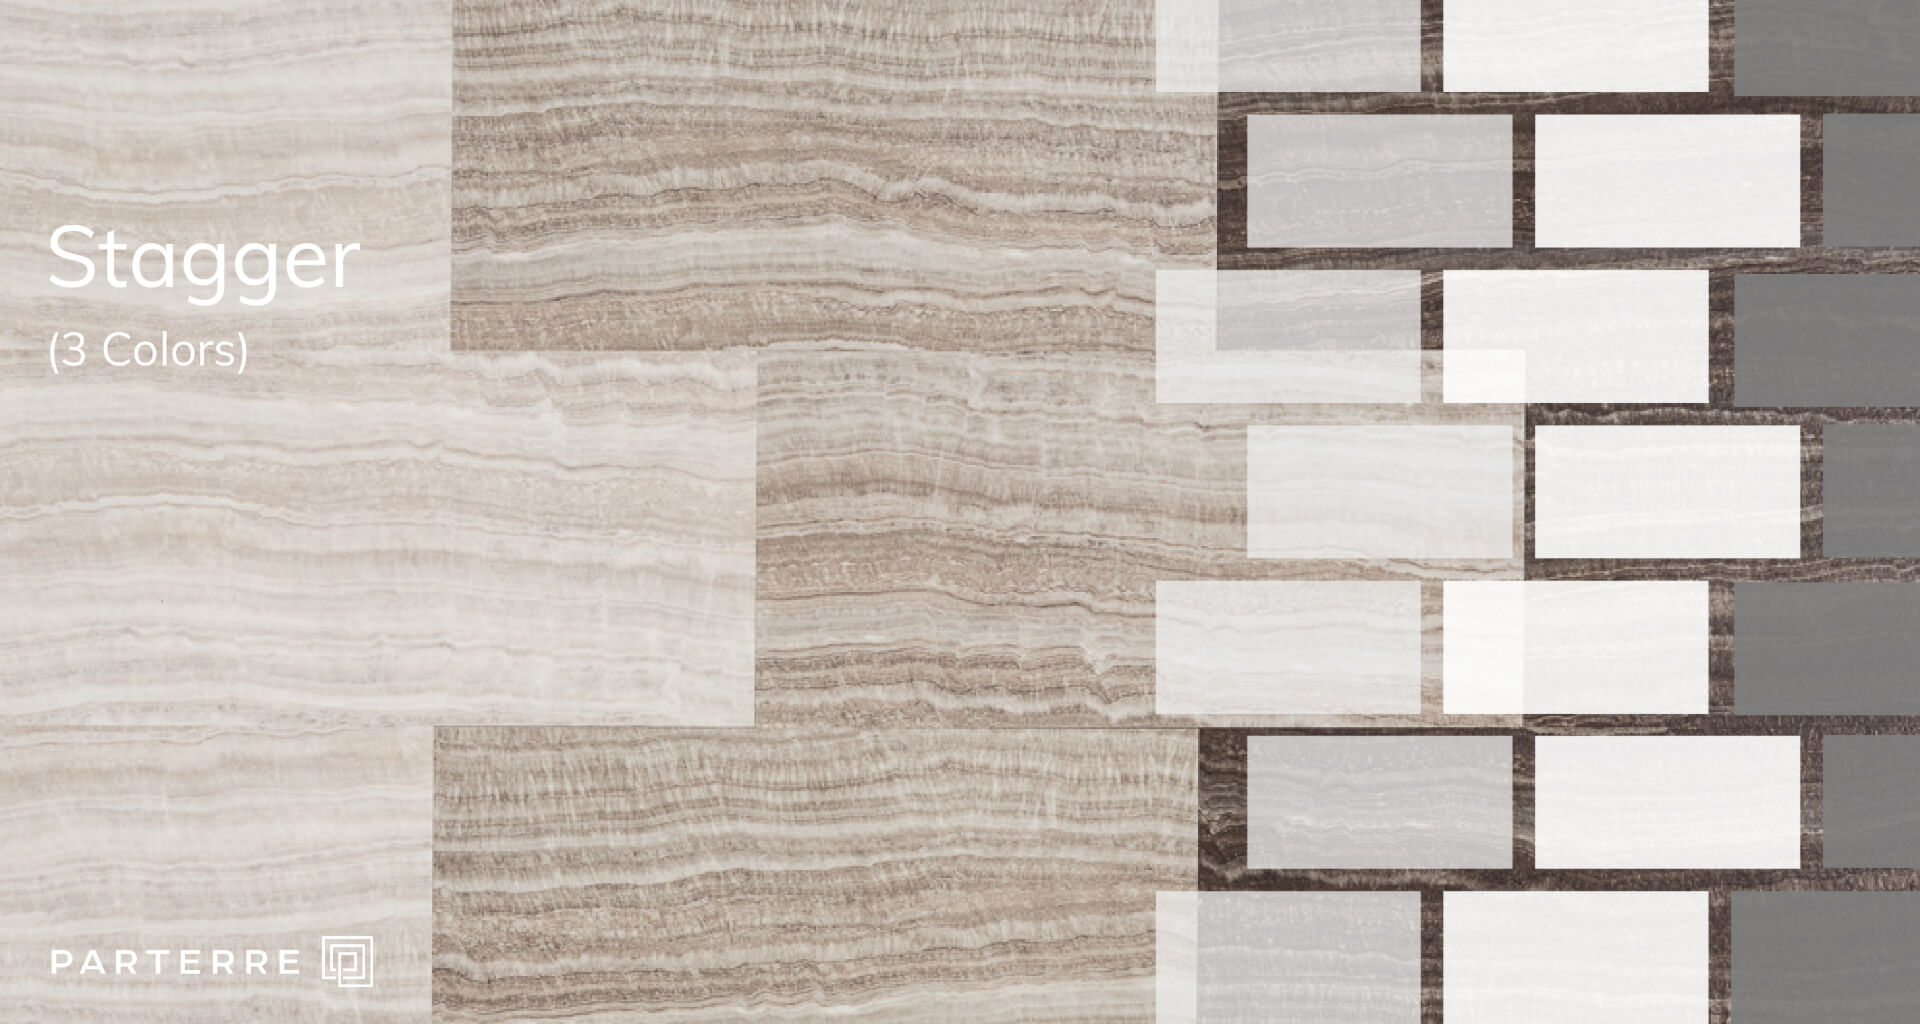 9 Vinyl Flooring Patterns For Your Next, Vinyl Plank Flooring Stone Pattern